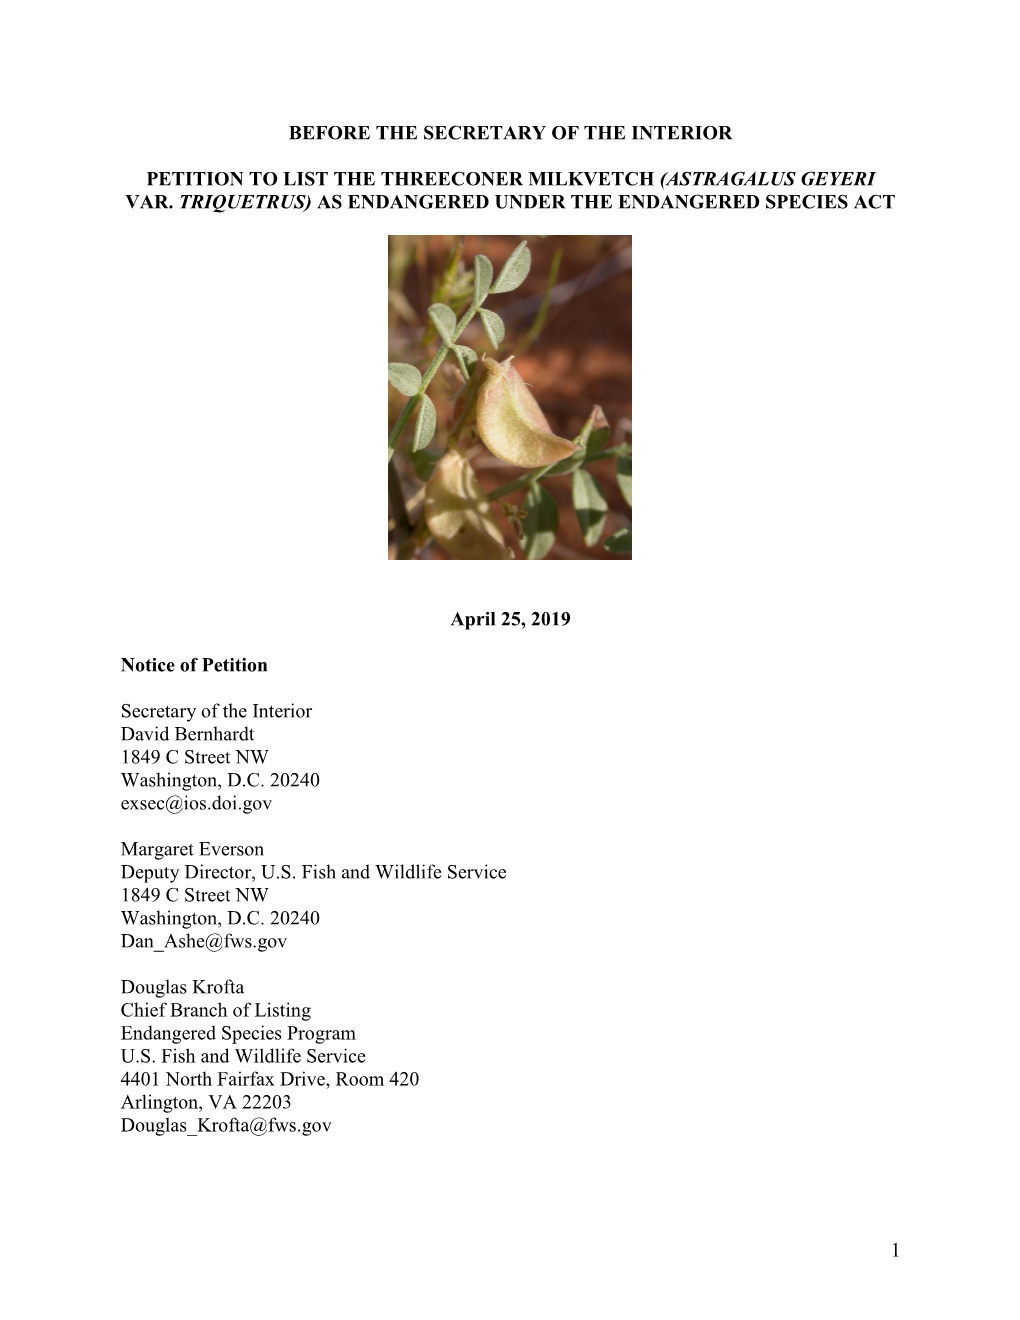 Petition to List Threecorner Milkvetch (Astragalus Geyeri Var